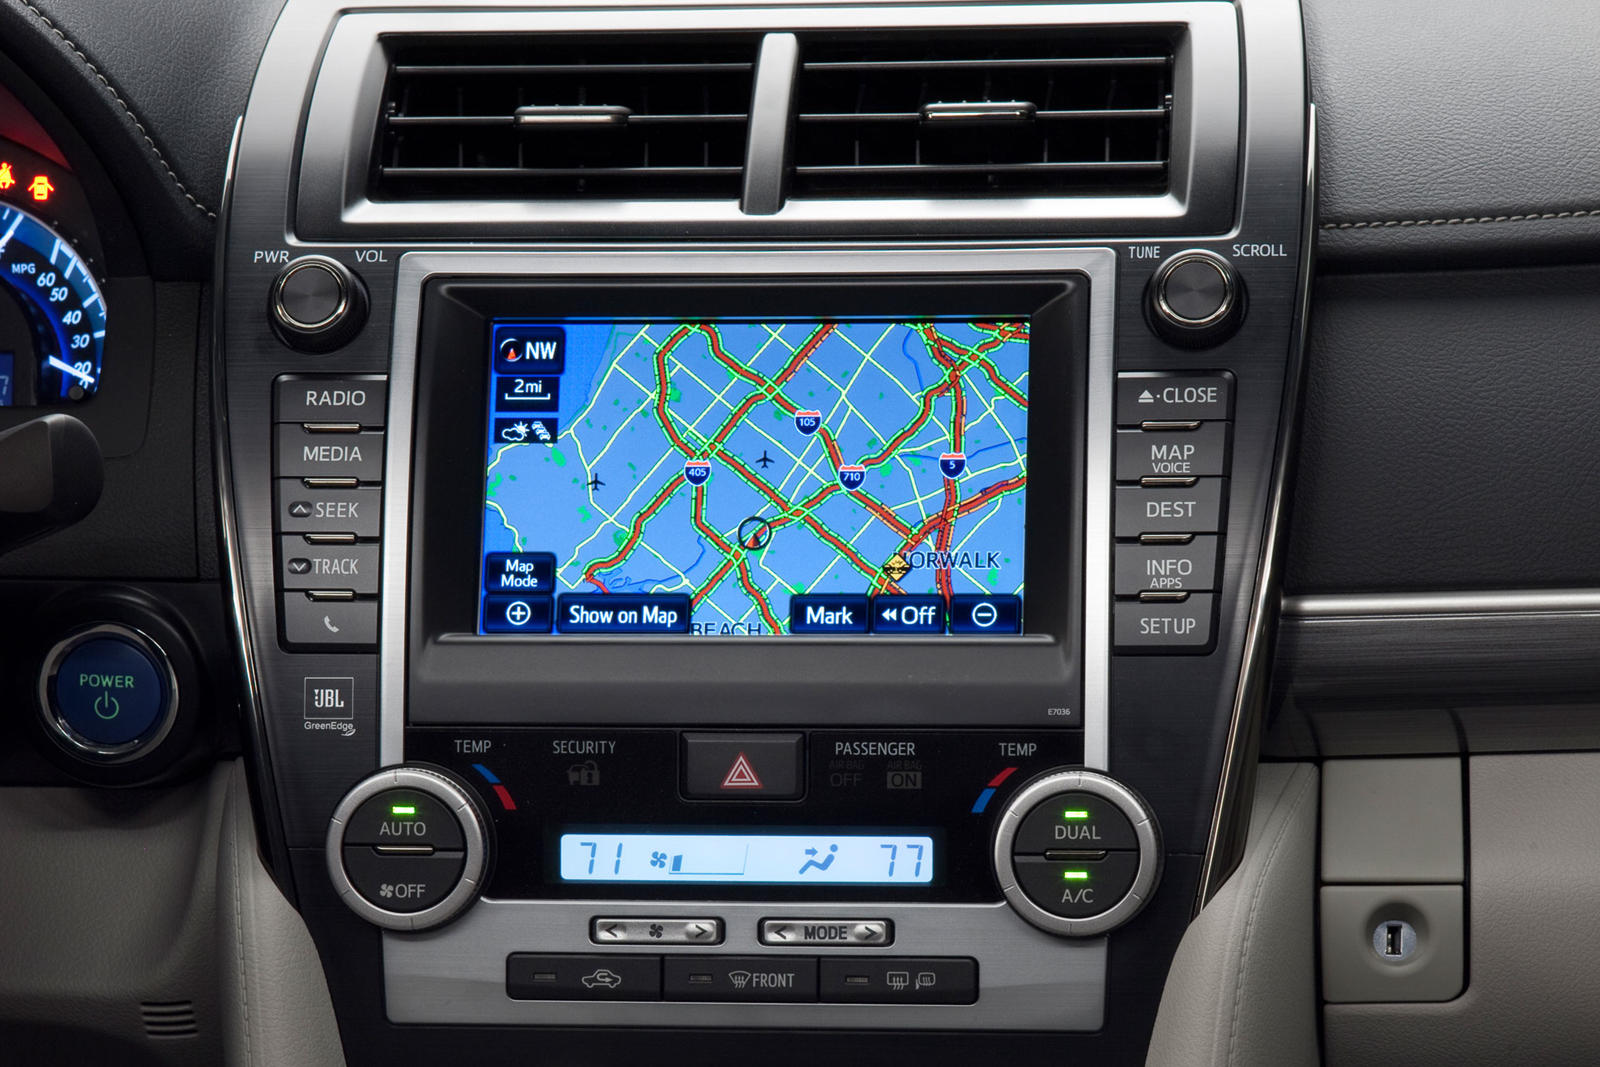 2012 Toyota Camry Hybrid Central Console Navigation System